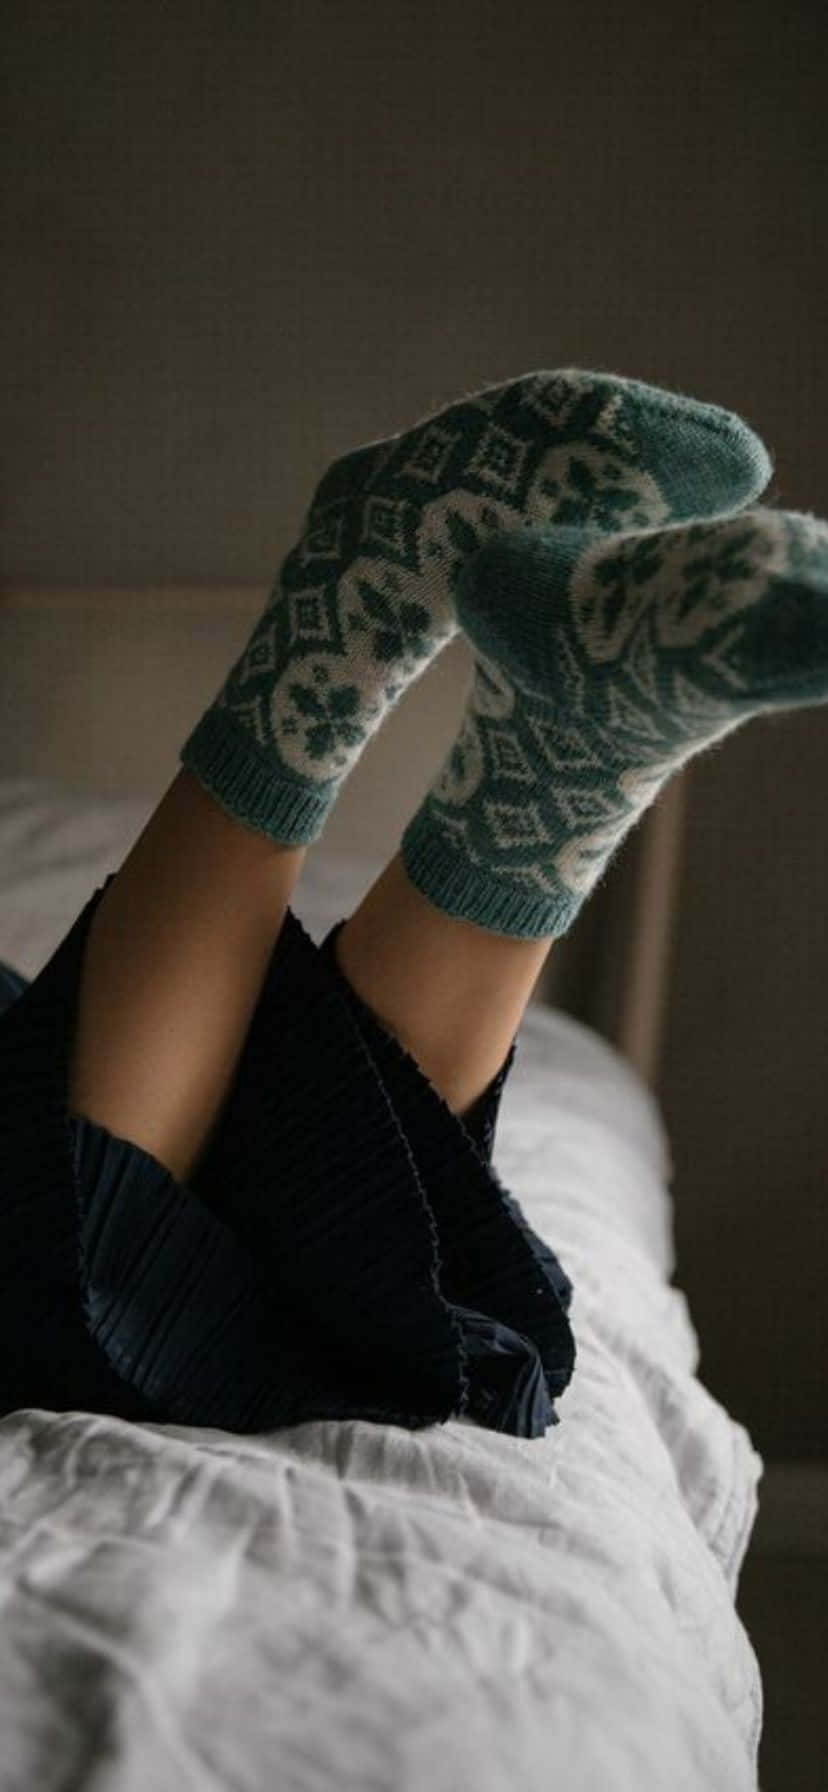 Cozy Winter Socks Wallpaper